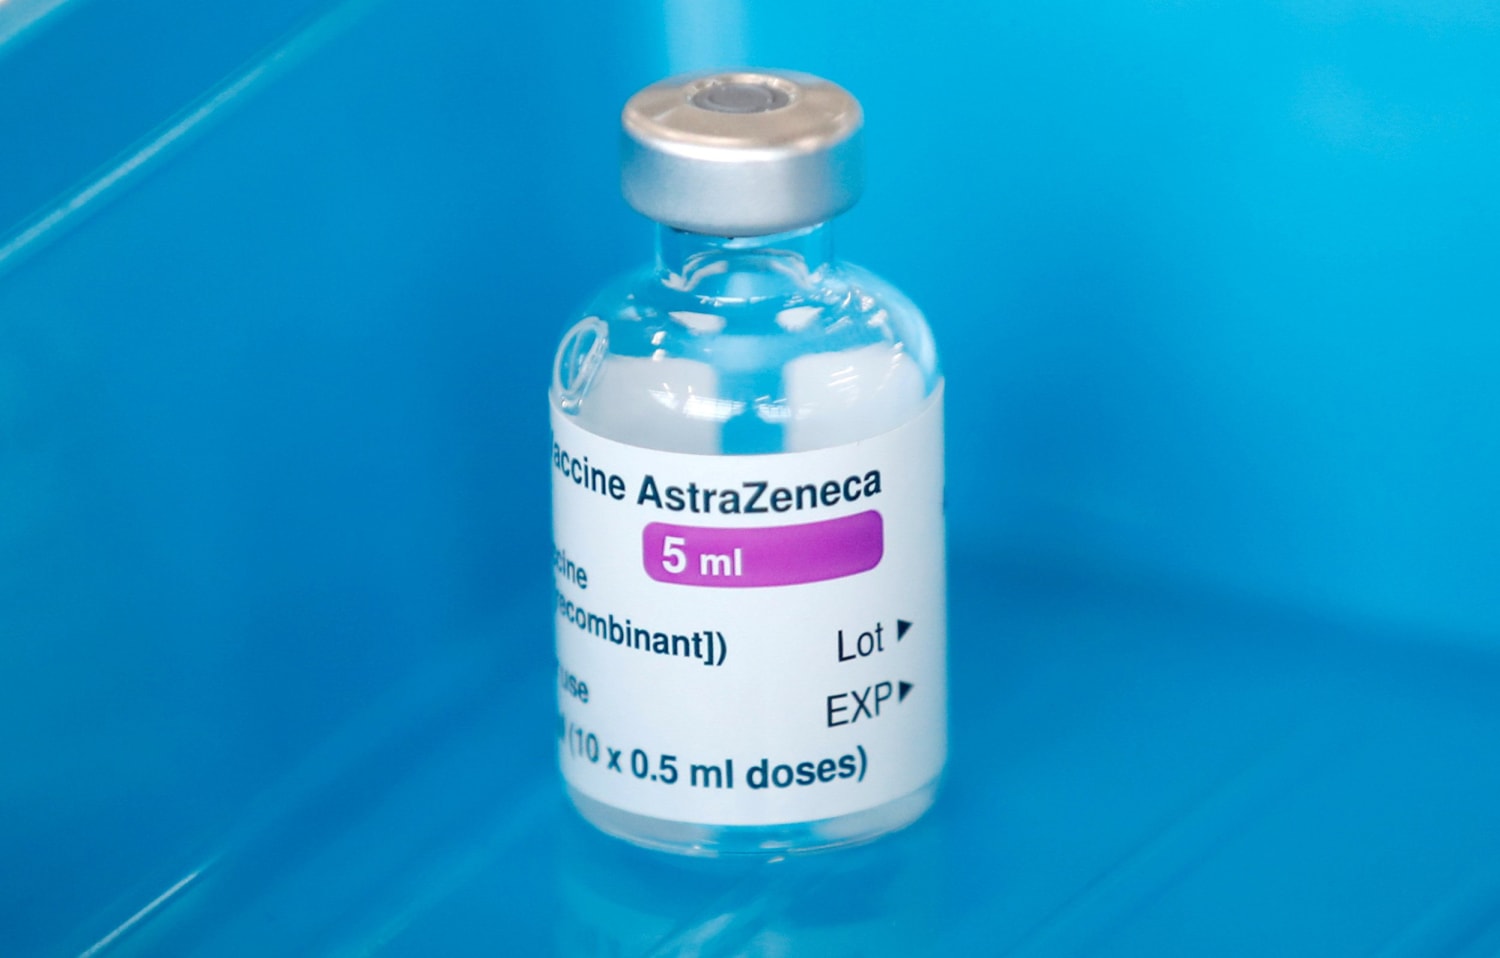 Oxford-AstraZeneca Coronavirus Vaccine to be Tested on Children